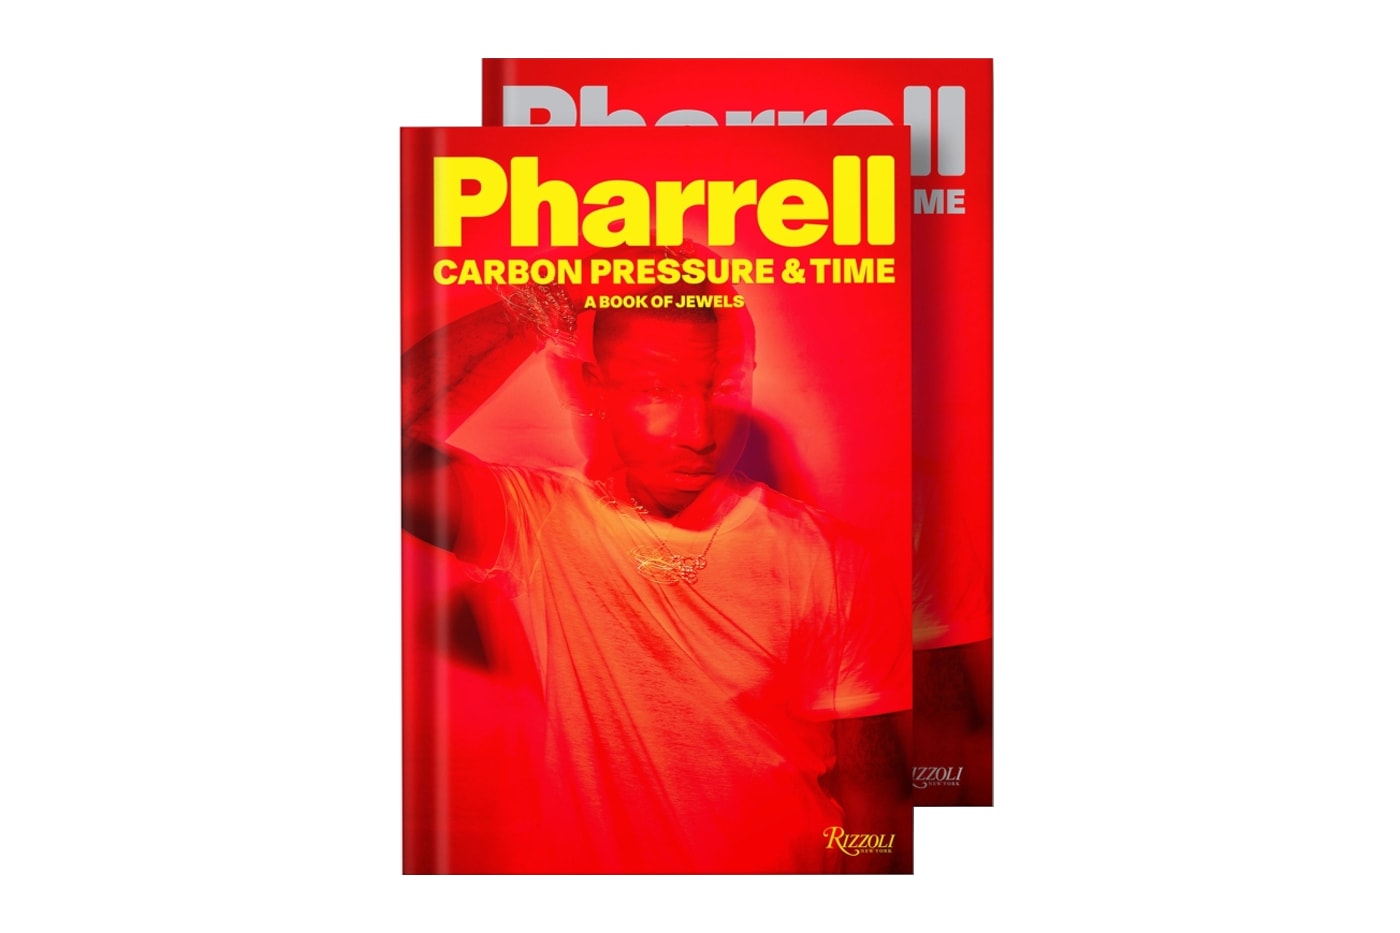 Pharrell Williams Launches New Book on His Personal Jewels Collection With Rizzoli Yoon ahn ambush sarah andelman enzo lefort deve hynes colette jean imbert louis vuitton jacob & co casio g-shock rubies diamonds lorraine schwartz tiffany & co. alexandre arnault lvmh